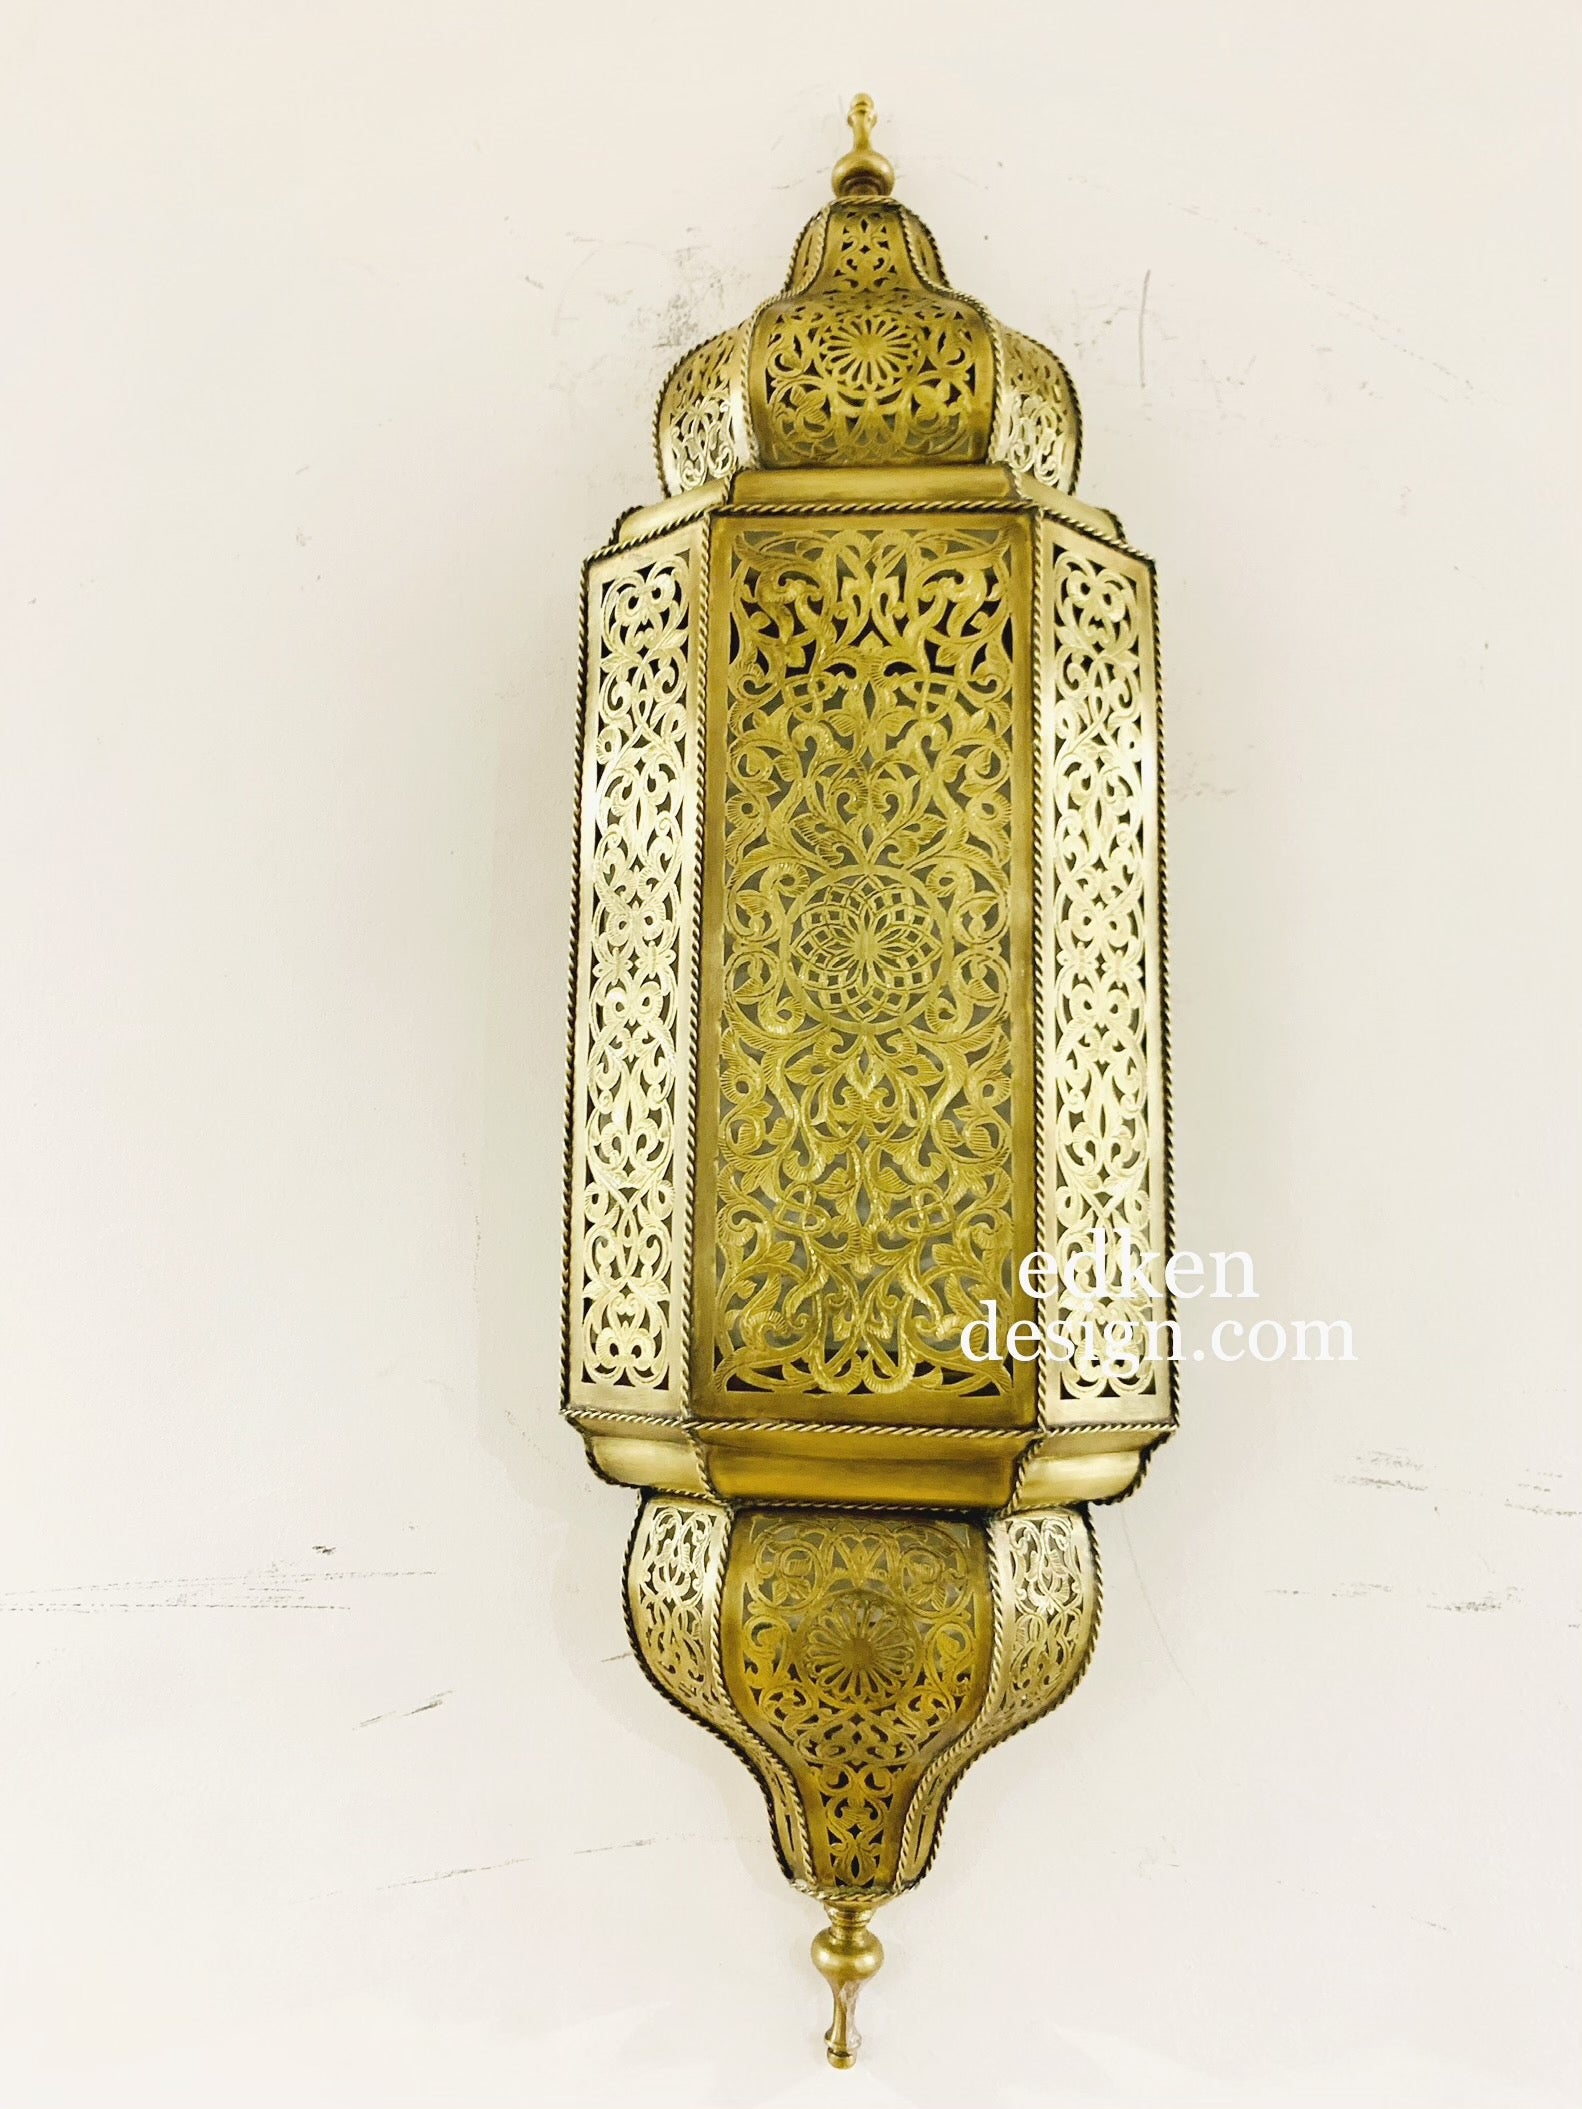 EDKEN LIGHTS - Off Moroccan Wall Lamps Sconce Fixture Wall Lights Handmade Vintage Home Decor